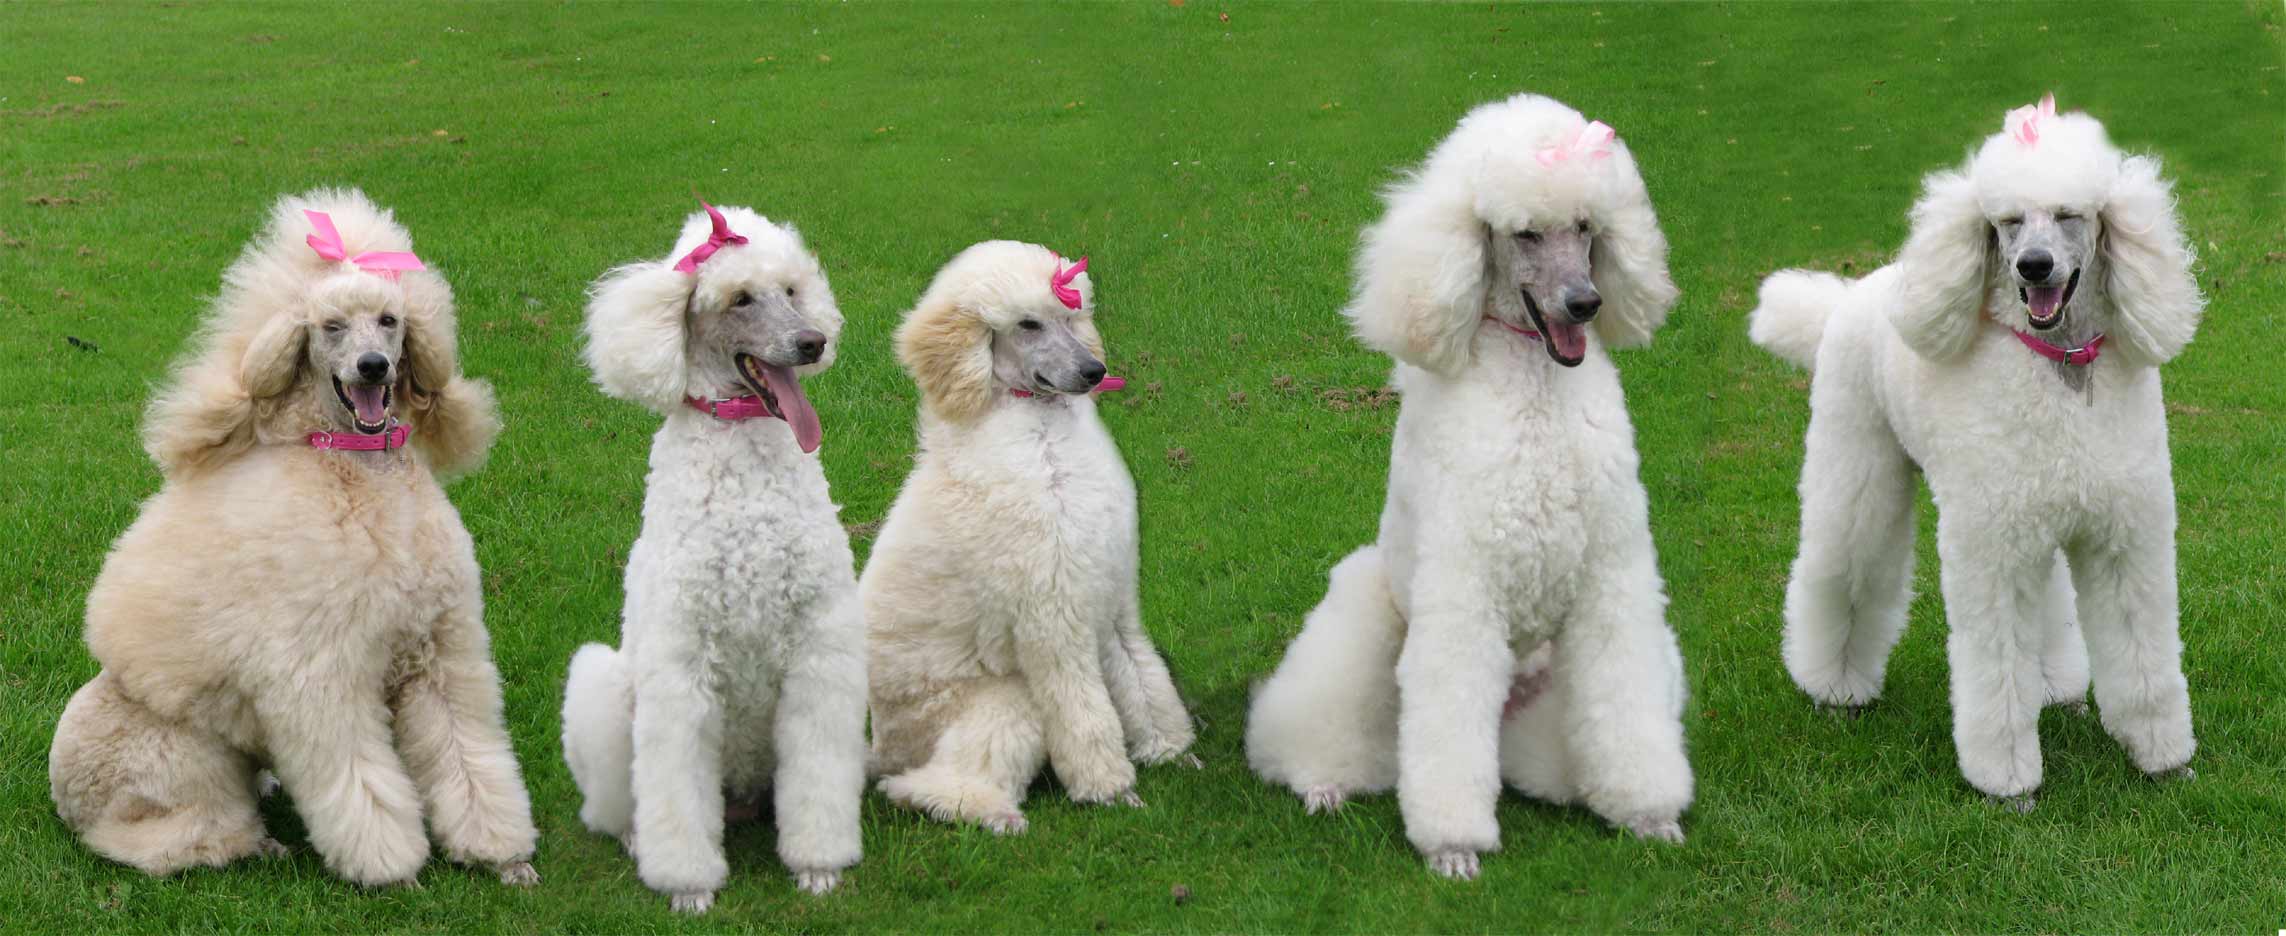 White poodles